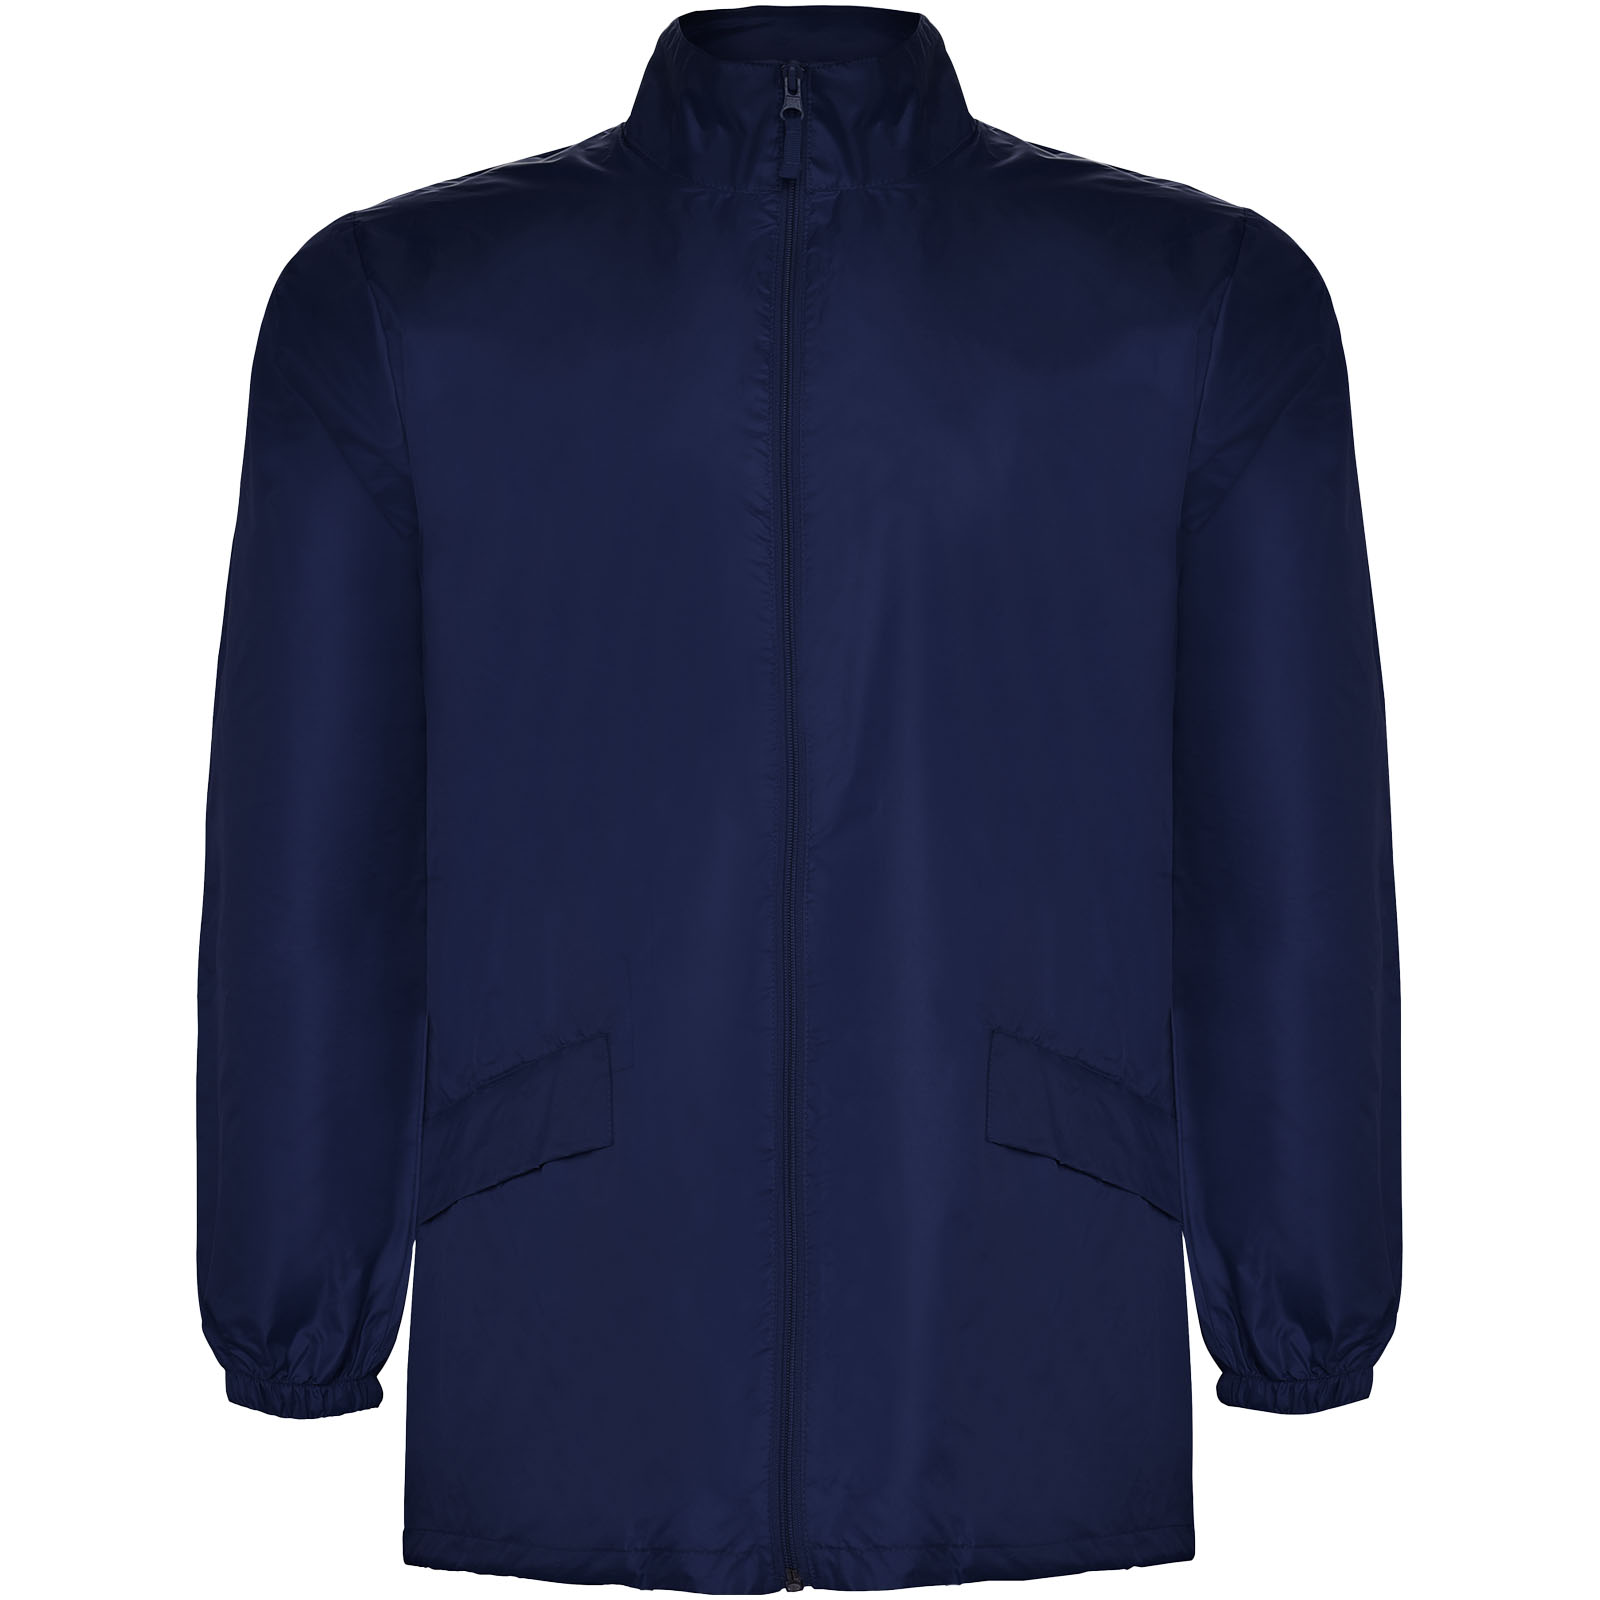 Clothing - Escocia unisex lightweight rain jacket